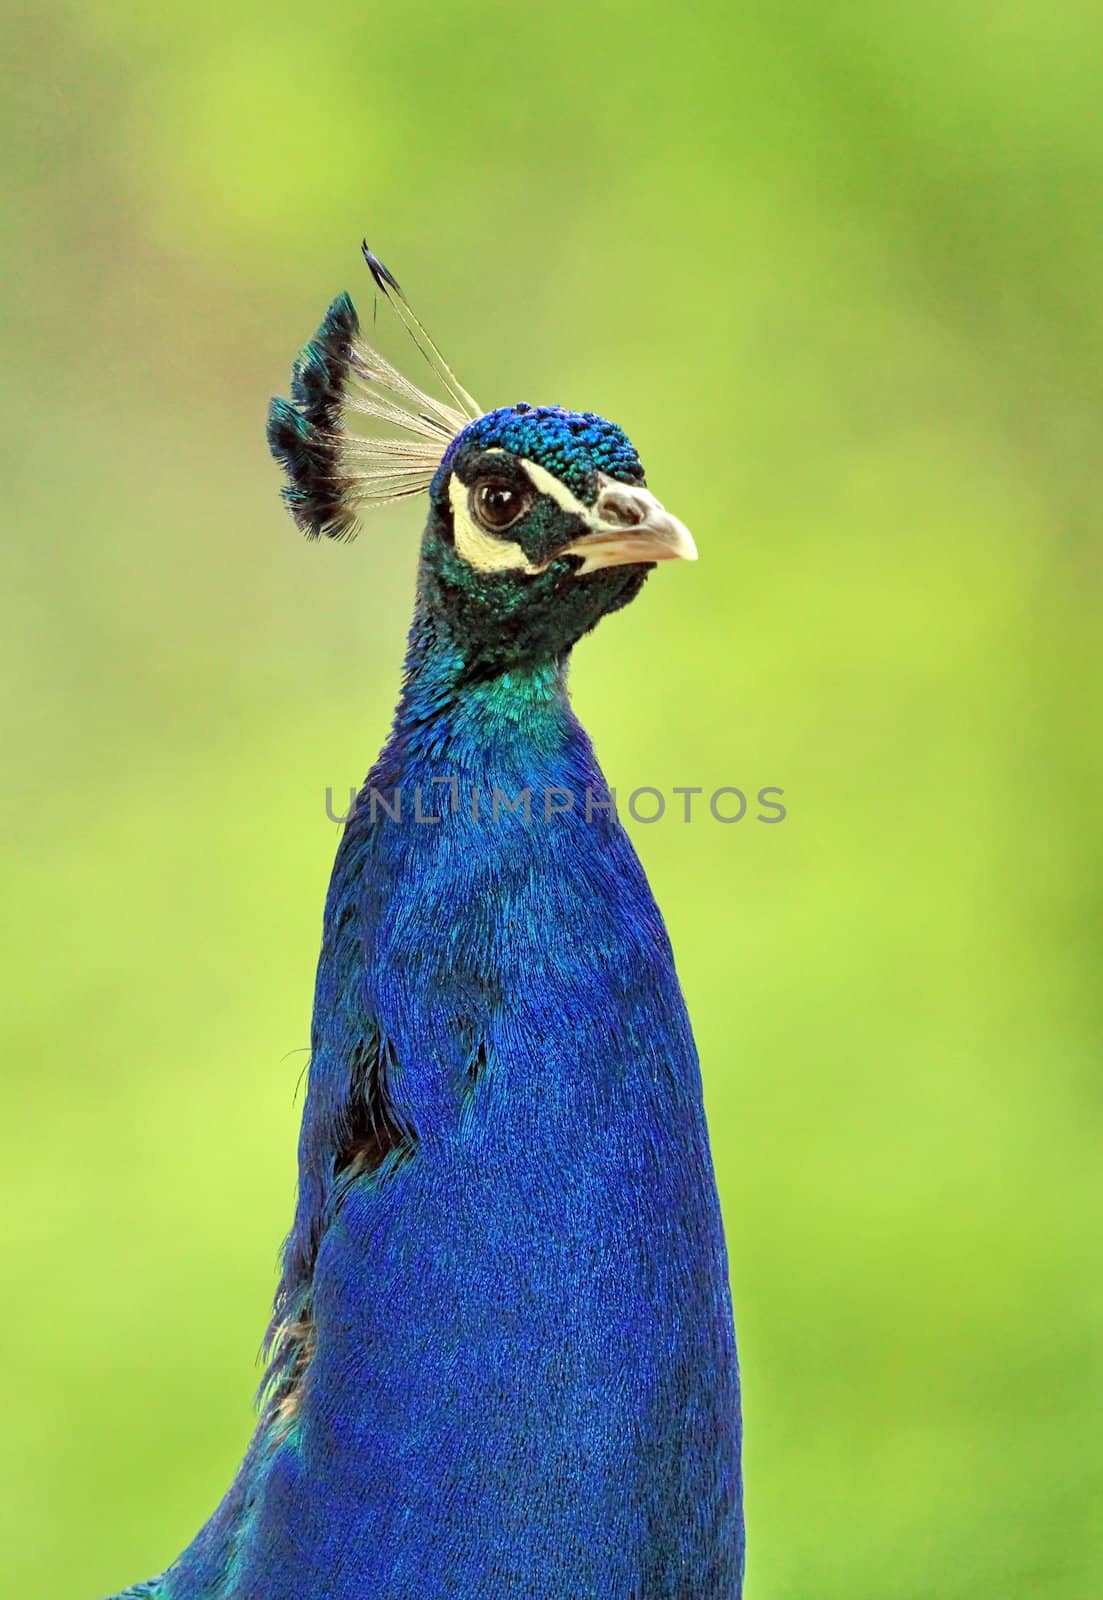 Male peacock by Elenaphotos21